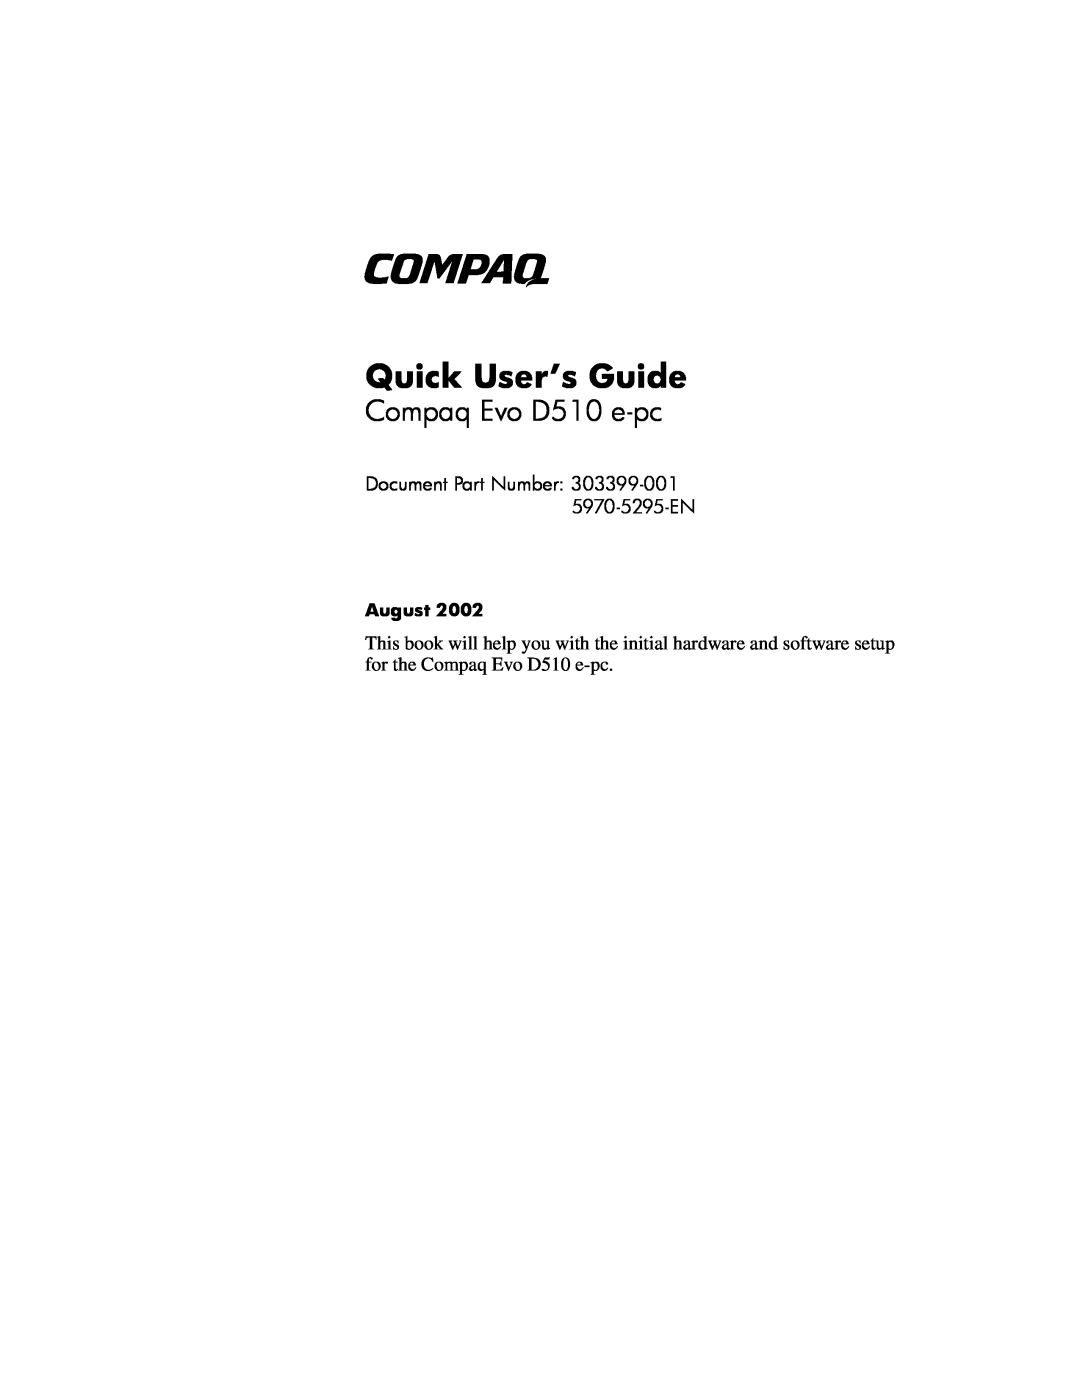 Compaq manual Quick User’s Guide, Compaq Evo D510 e-pc, Document Part Number 303399-001 5970-5295-EN, August 